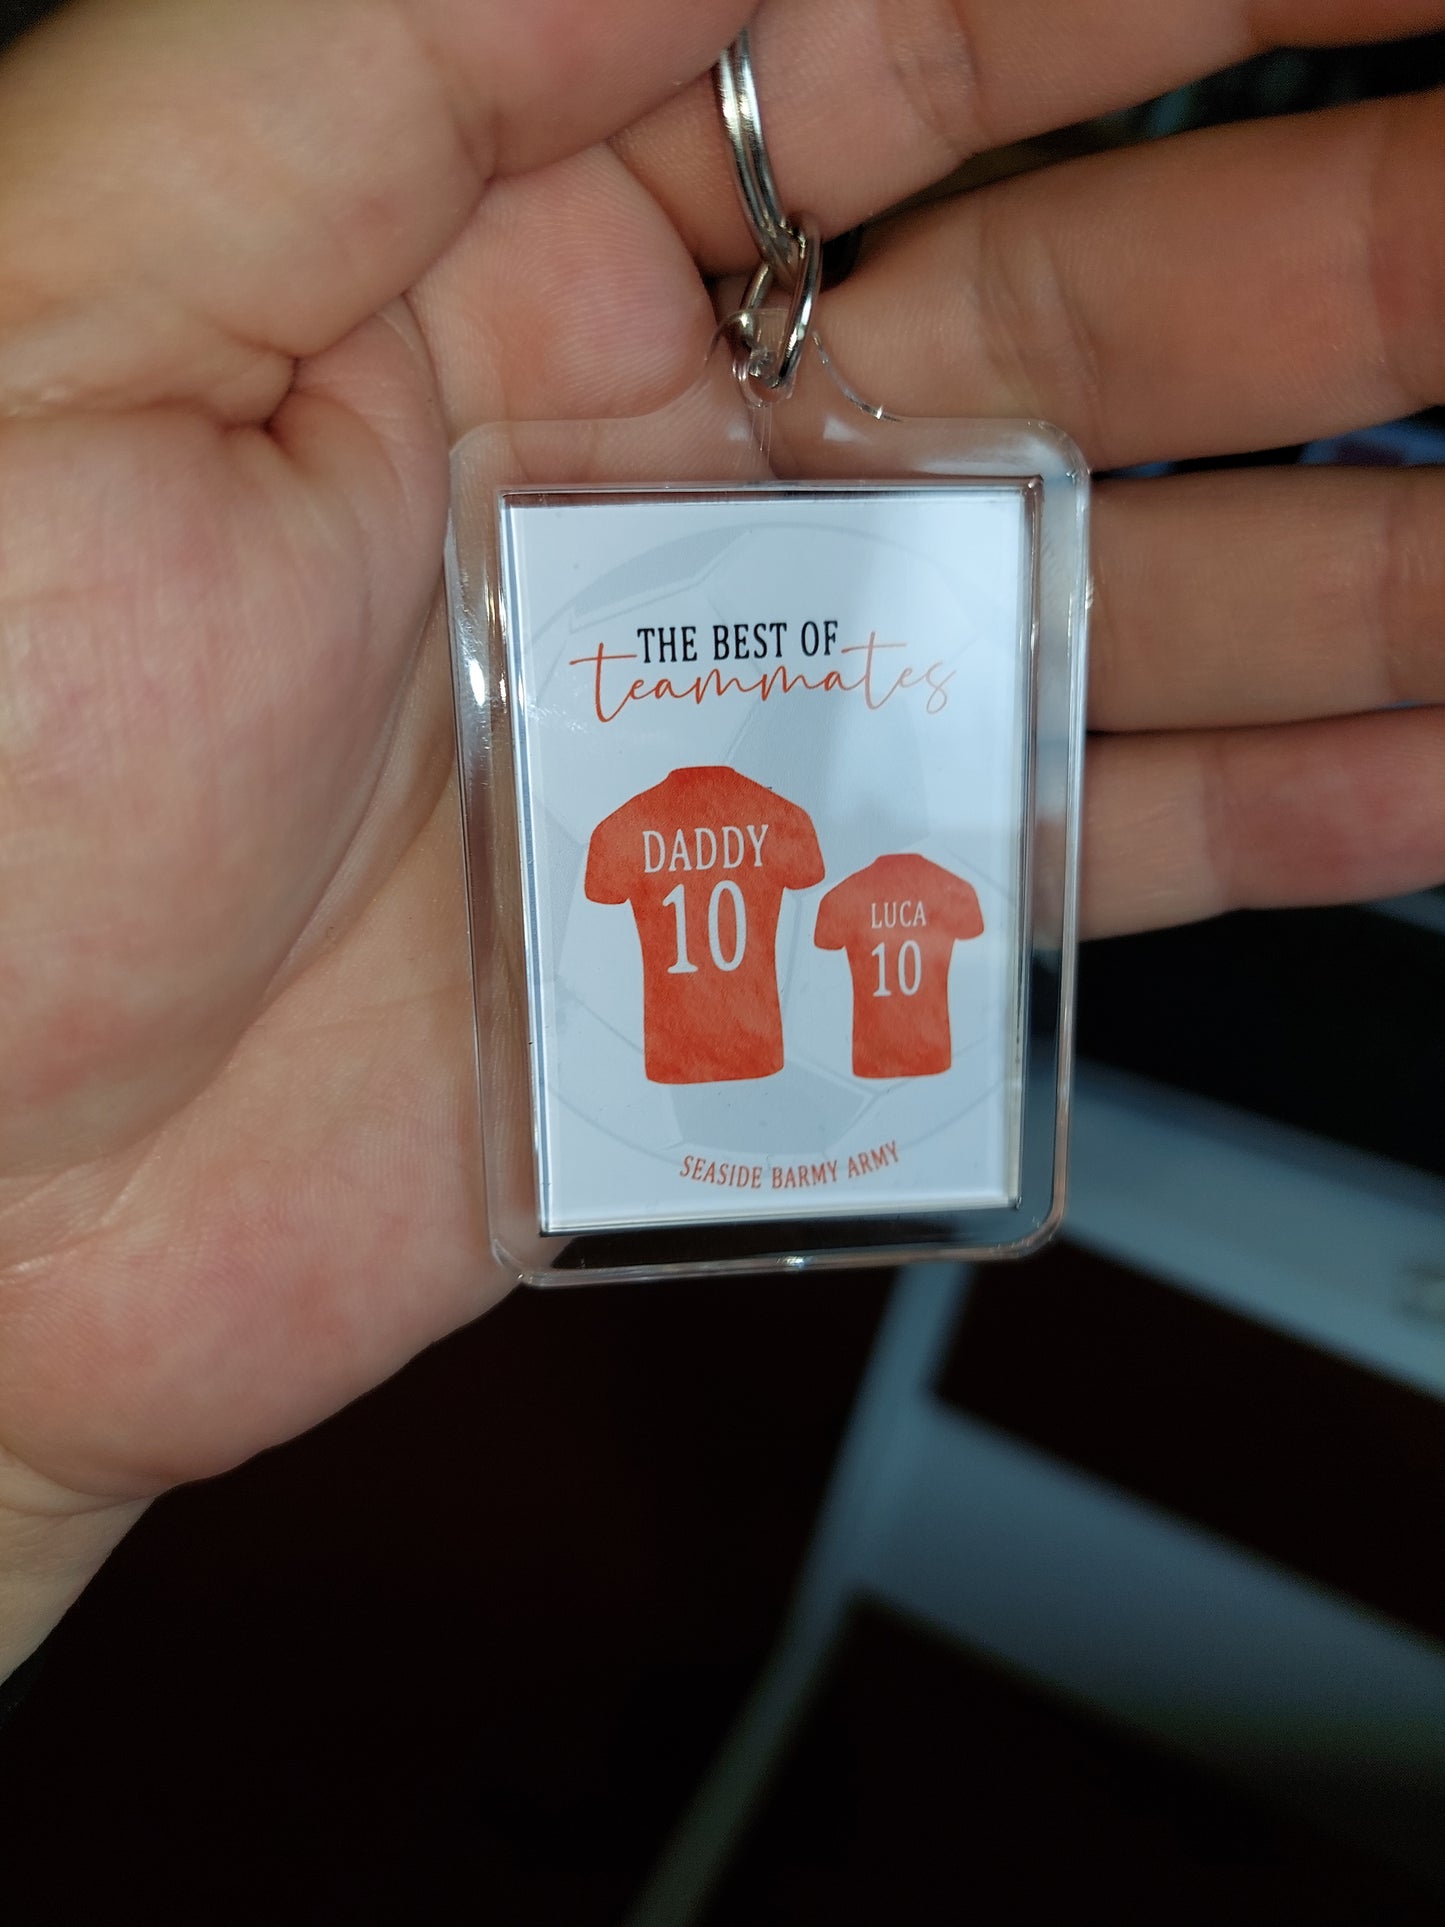 Keyring Gift | Football Tshirt Keyring | Father's Day Gift | Novelty Gift Idea